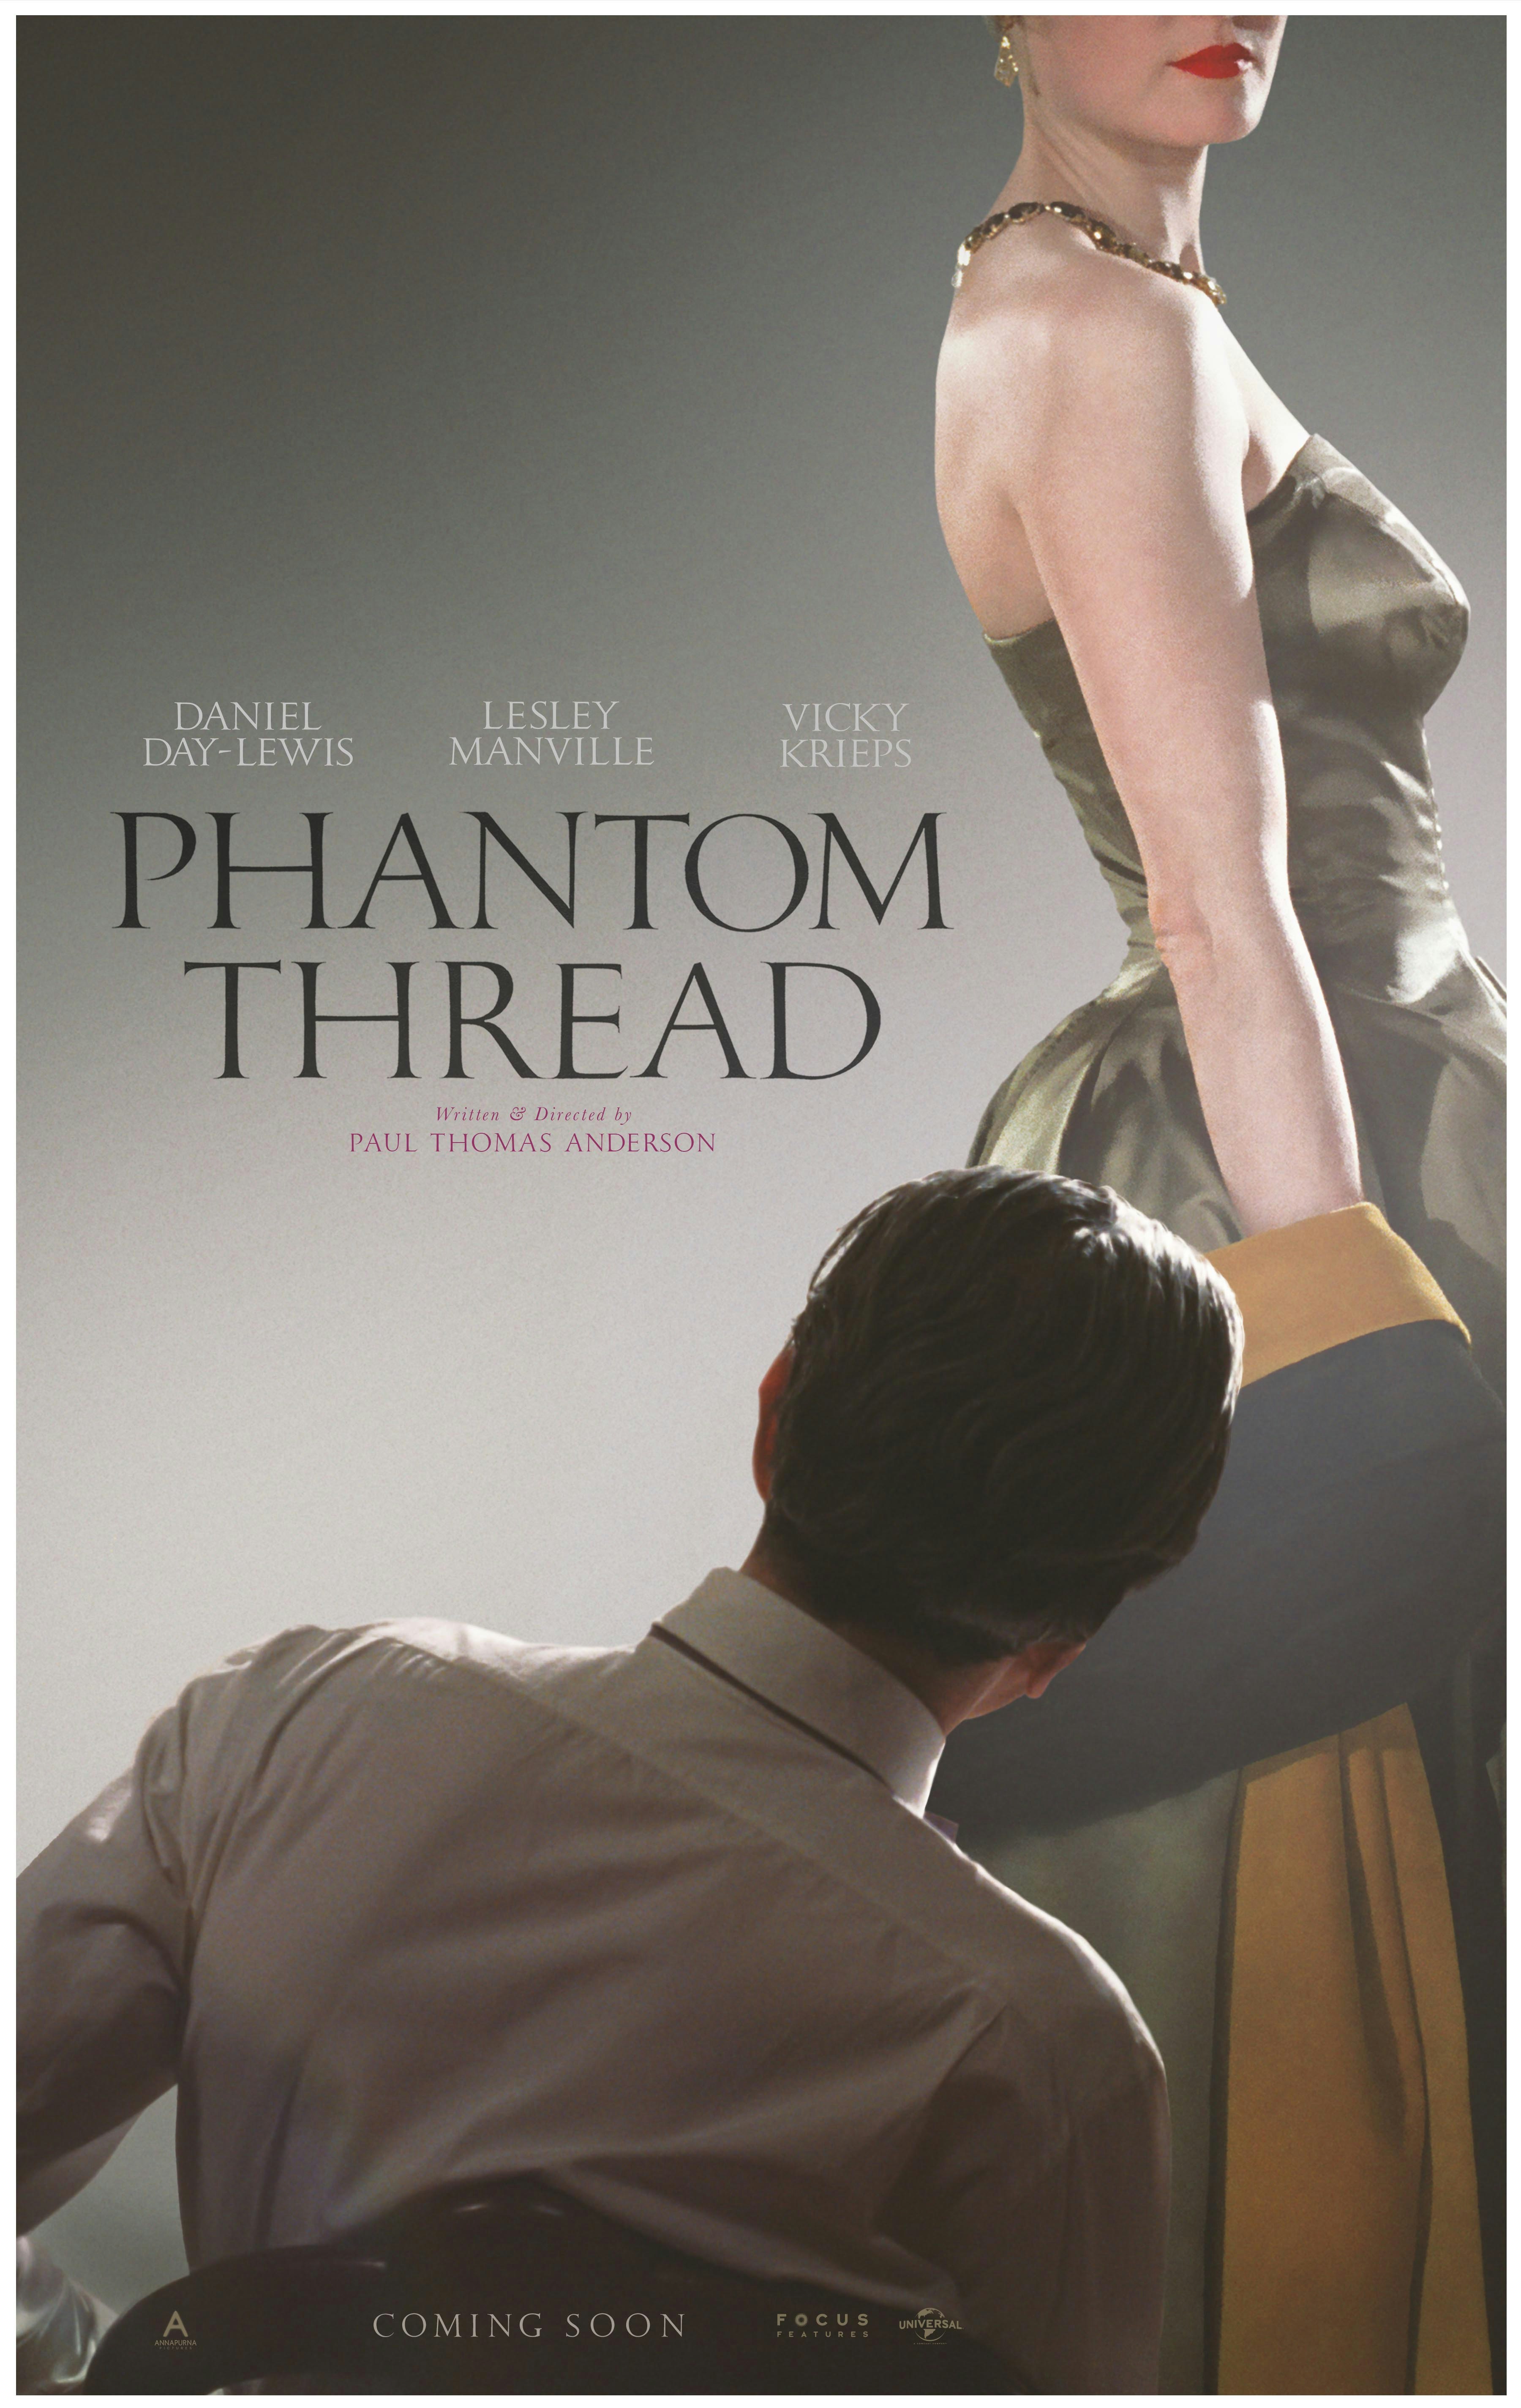 Daniel Day-Lewis final film role Phantom Thread review